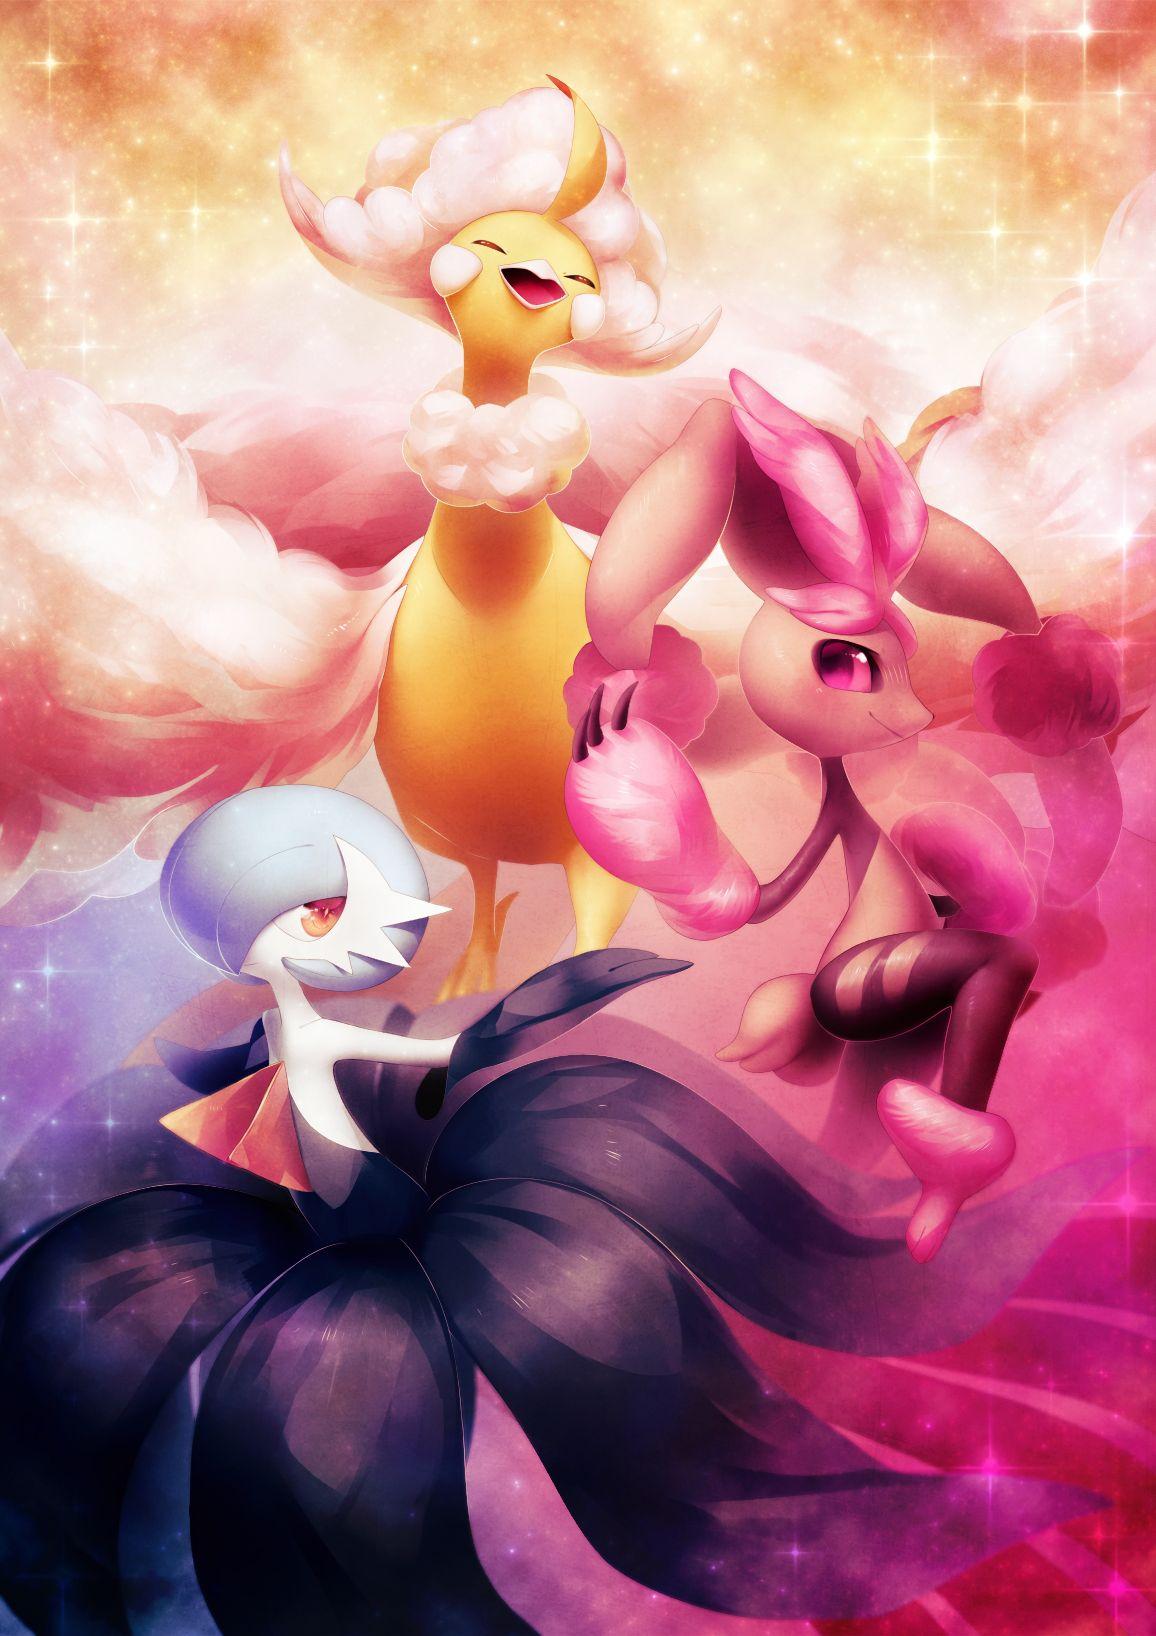 Pokémon Mobile Wallpaper Anime Image Board